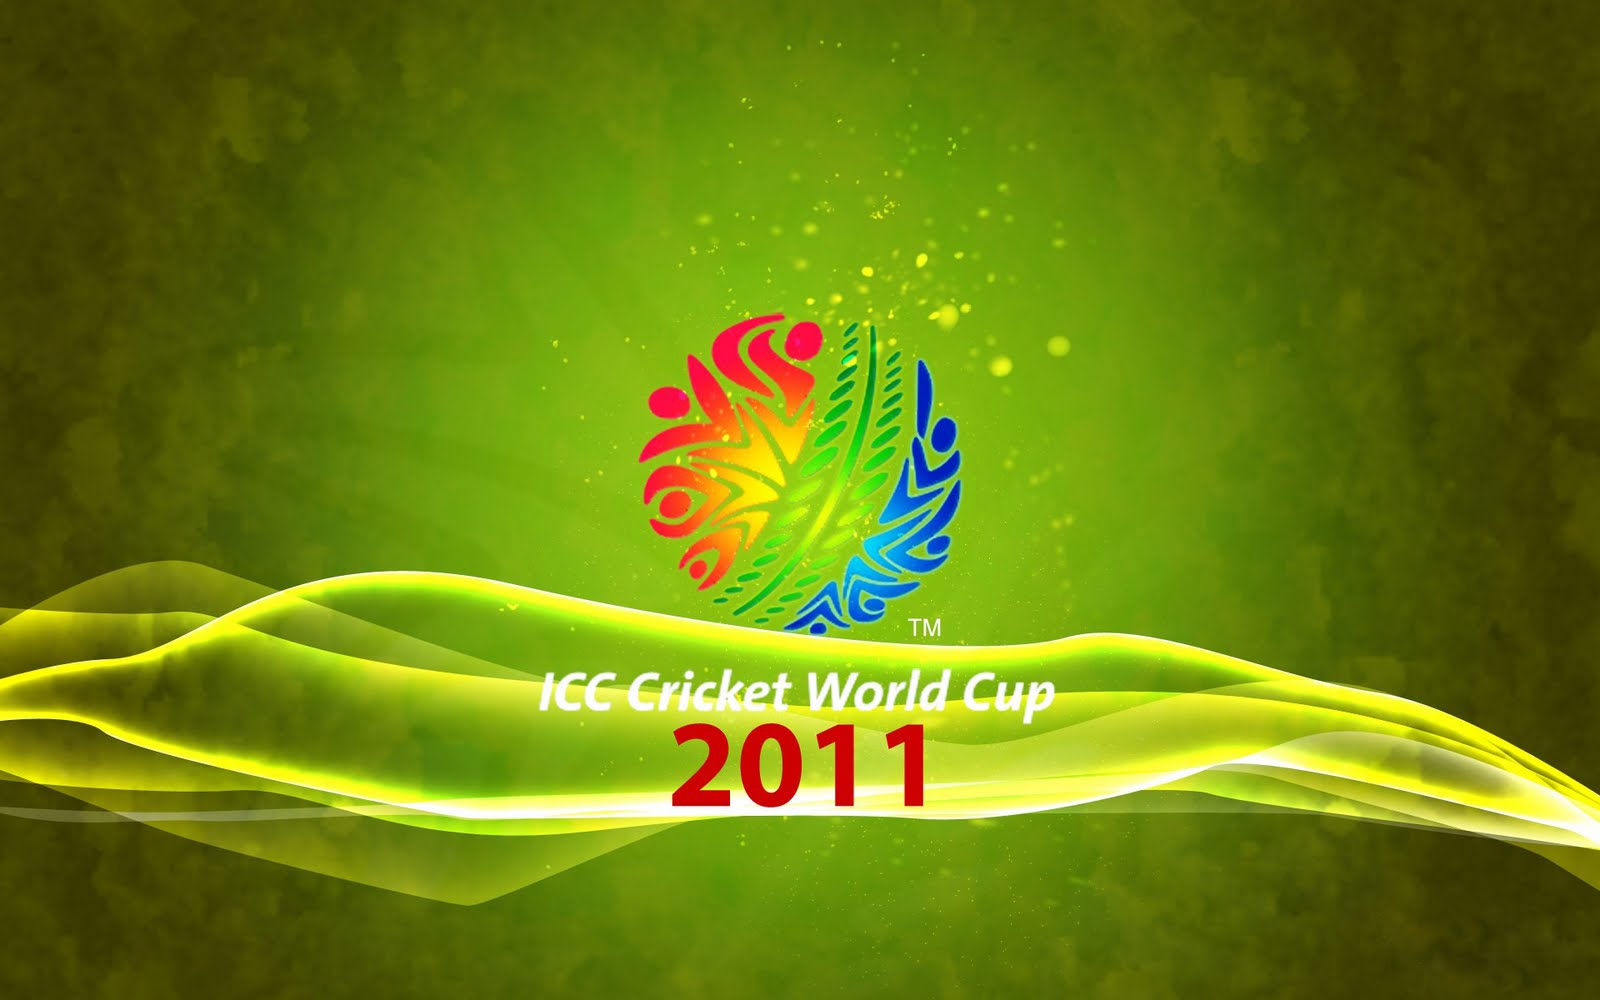 https://blogger.googleusercontent.com/img/b/R29vZ2xl/AVvXsEgsjmh9RZLrjTx2pWuRWF2MIOkBH2OZJ4cfeypEtxU6NImwmLtTRBKRemDcuLhTCEtqstJulM5spfXwb9qmuTiYAalByjbSdaia4qxEgB1speupC4UTVRA041Lt1MOSslMaaF7RGfAzBbM/s1600/Icc+Cricket+World+Cup+2011+%25284%2529.jpg